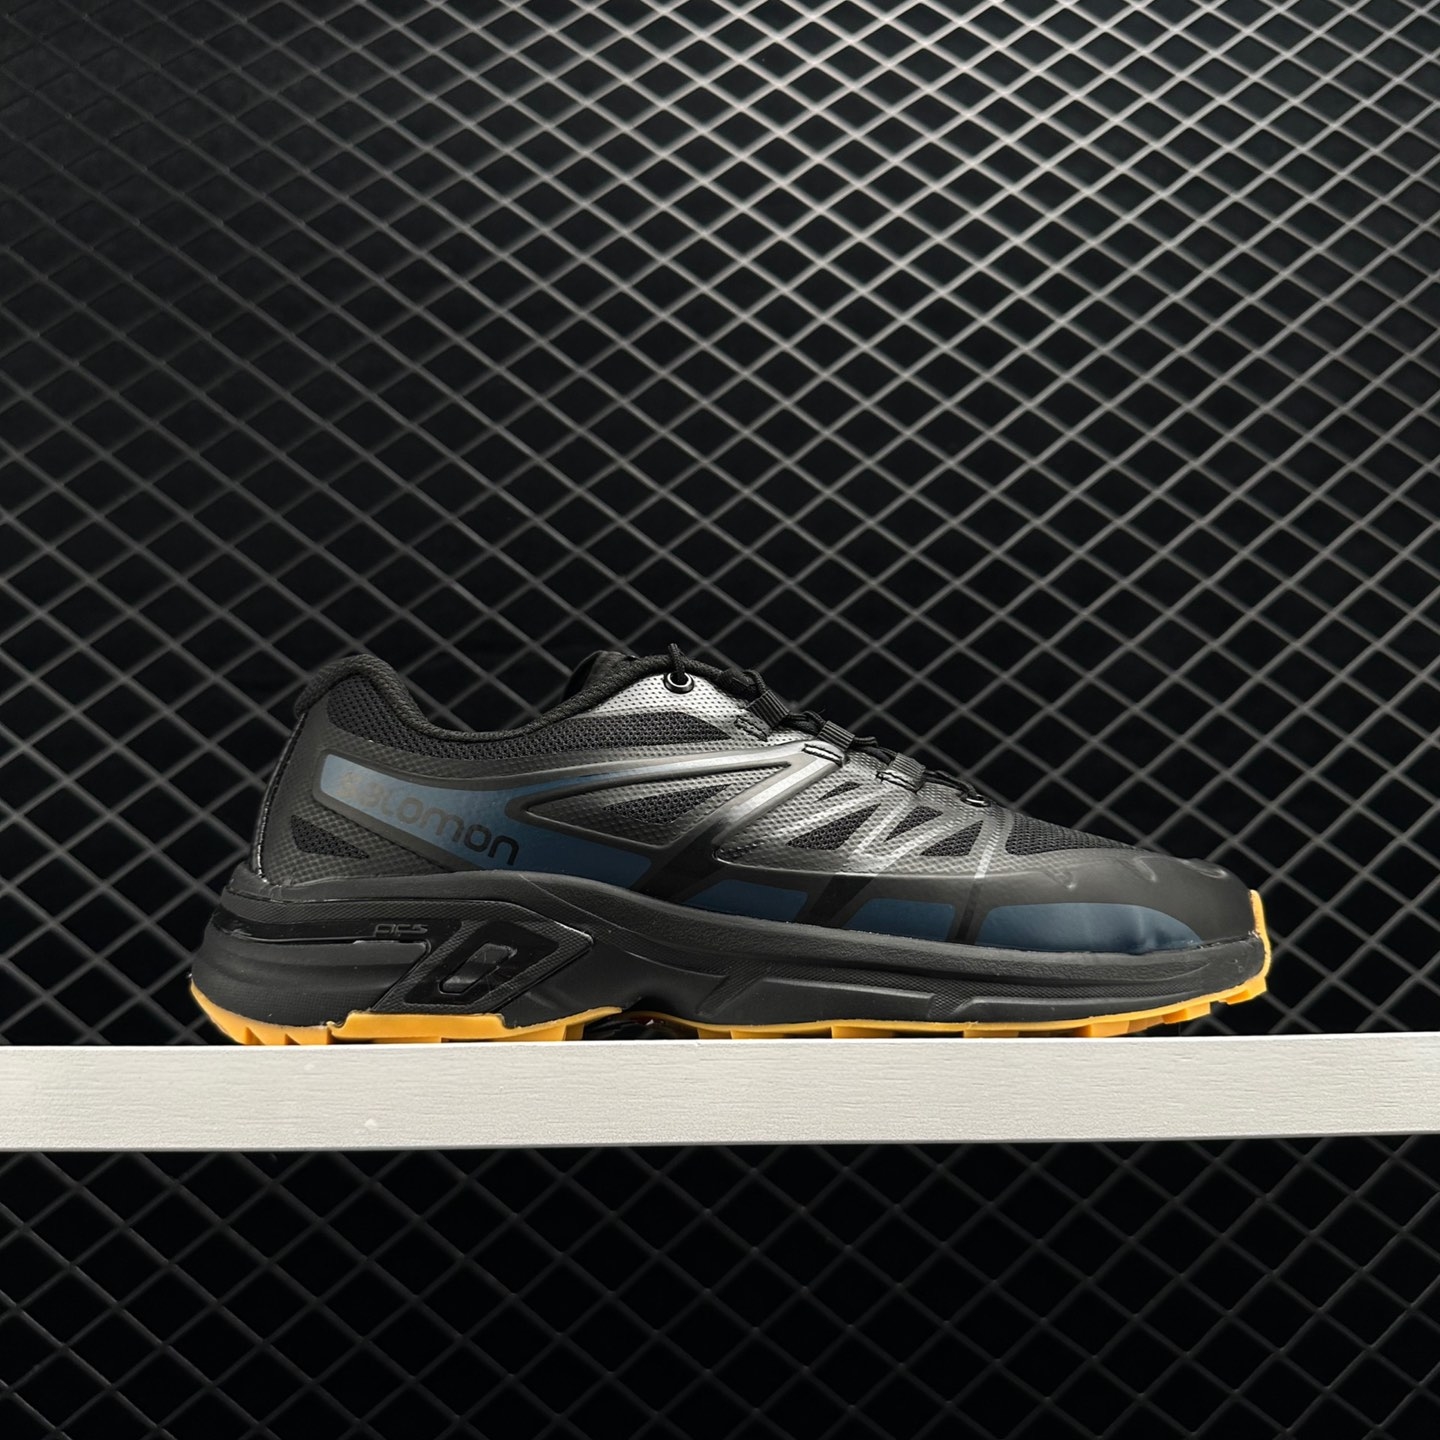 Salomon XT-Wings 2 Advanced Sneakers Black Tan - High-performance footwear for outdoor adventures